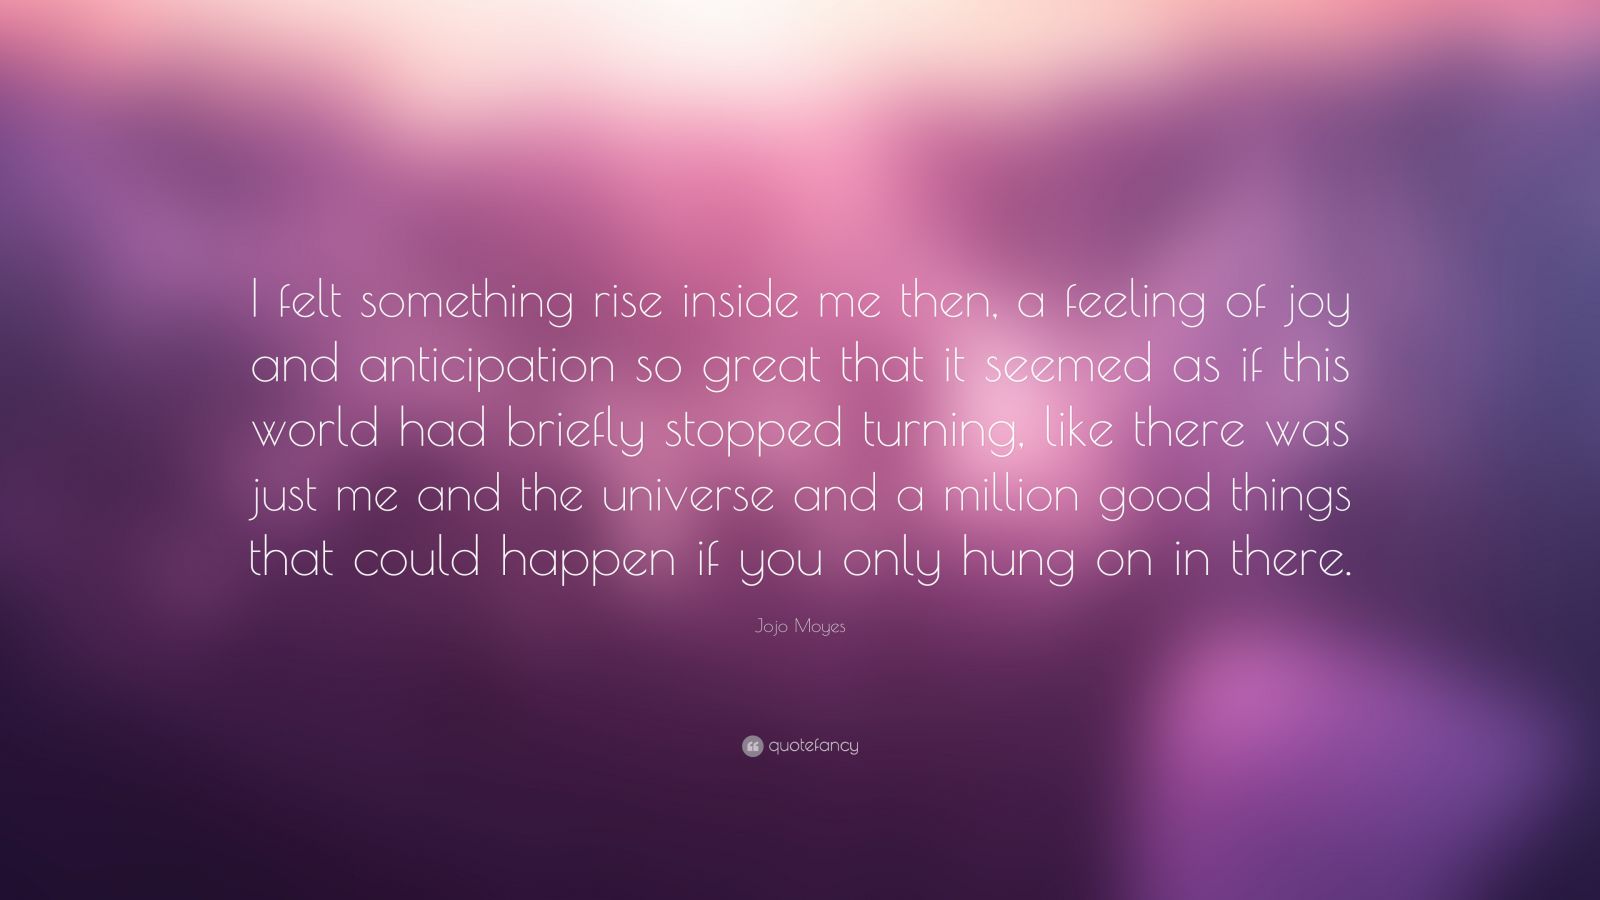 Jojo Moyes Quote: “I felt something rise inside me then, a feeling of ...